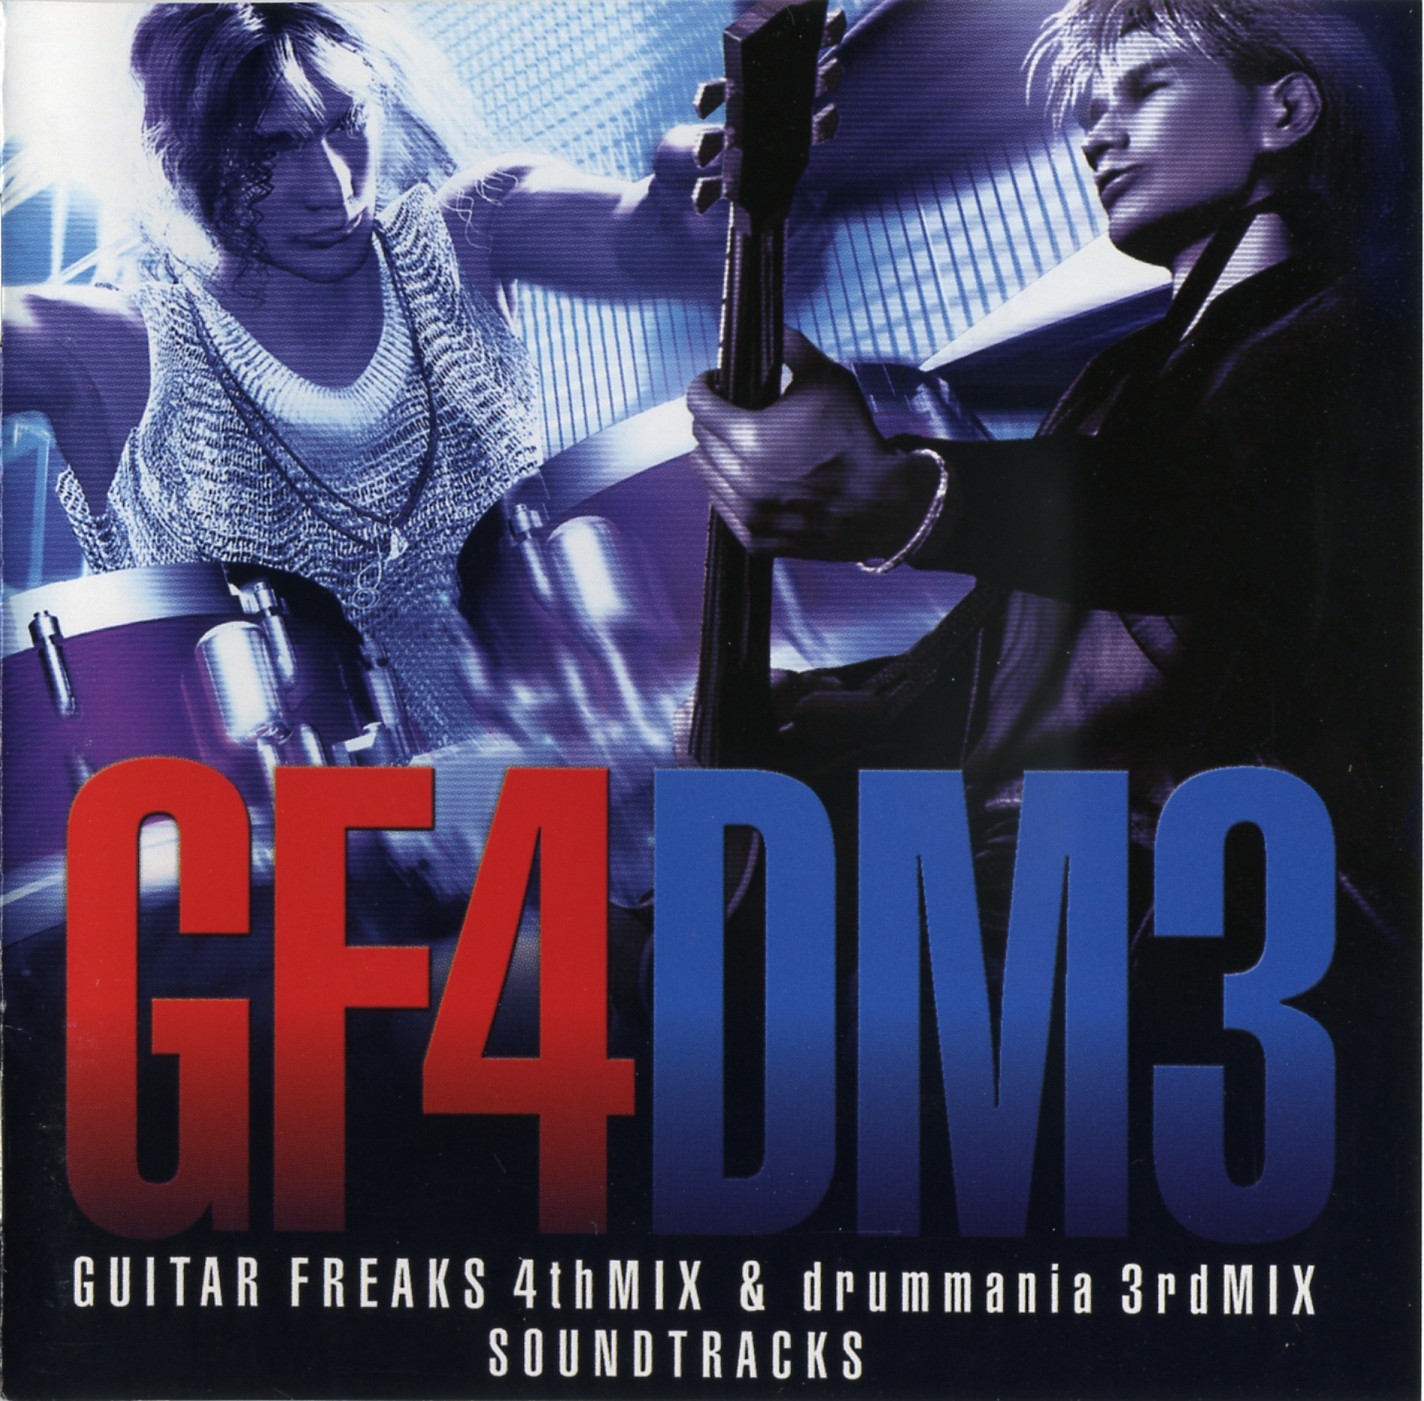 Guitar Freaks 4th Mix & Drummania 3rd Mix Soundtracks (2001) MP3 